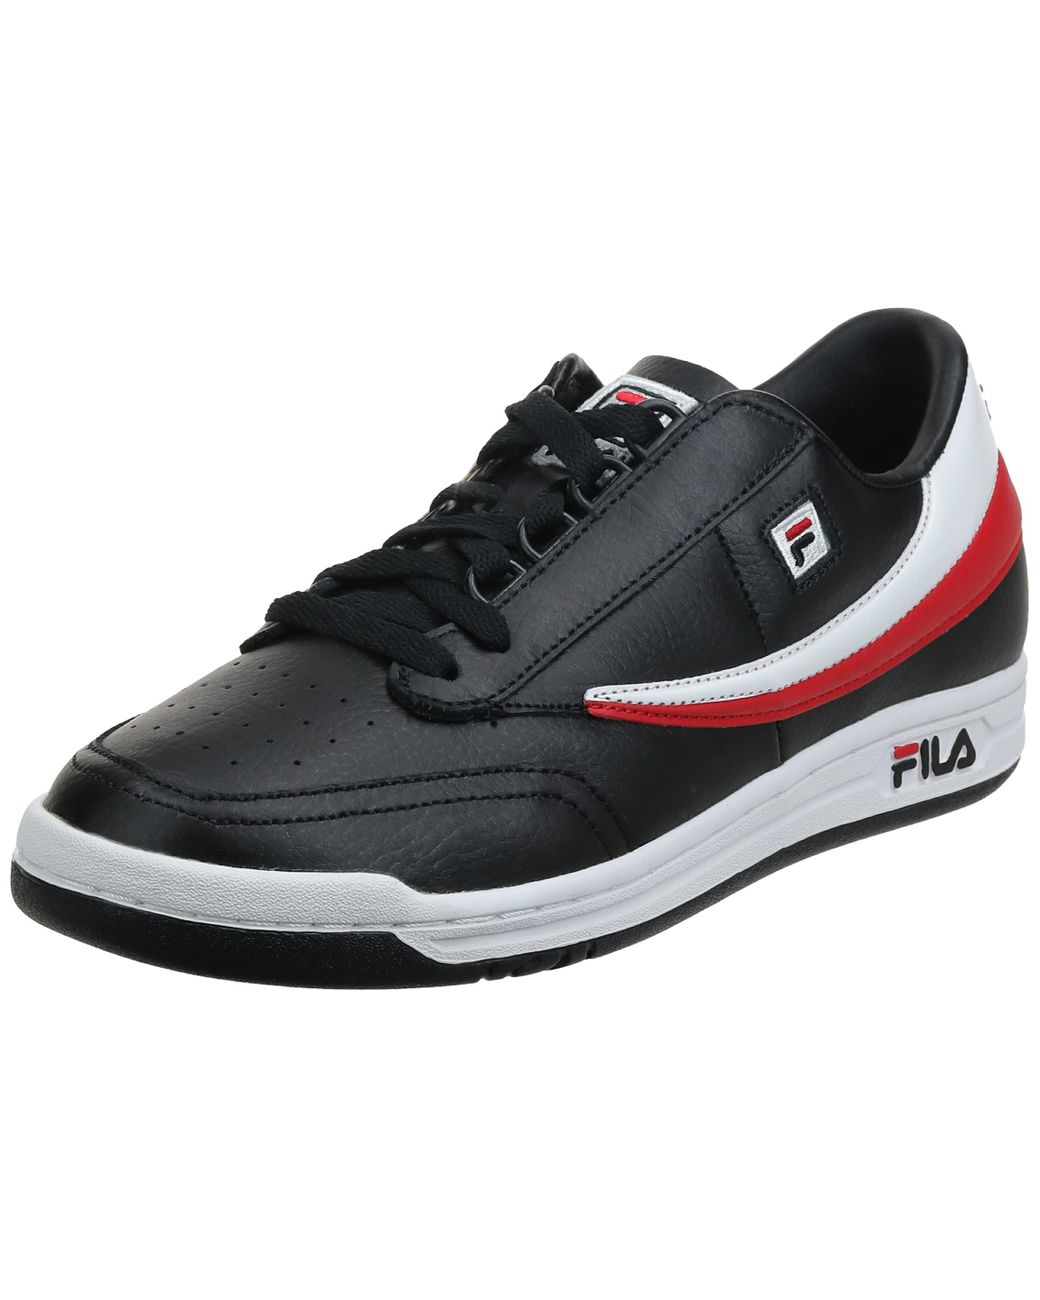 Fila Leather Original Tennis Fashion Sneaker in Black / White / Red (Black)  for Men - Save 37% - Lyst